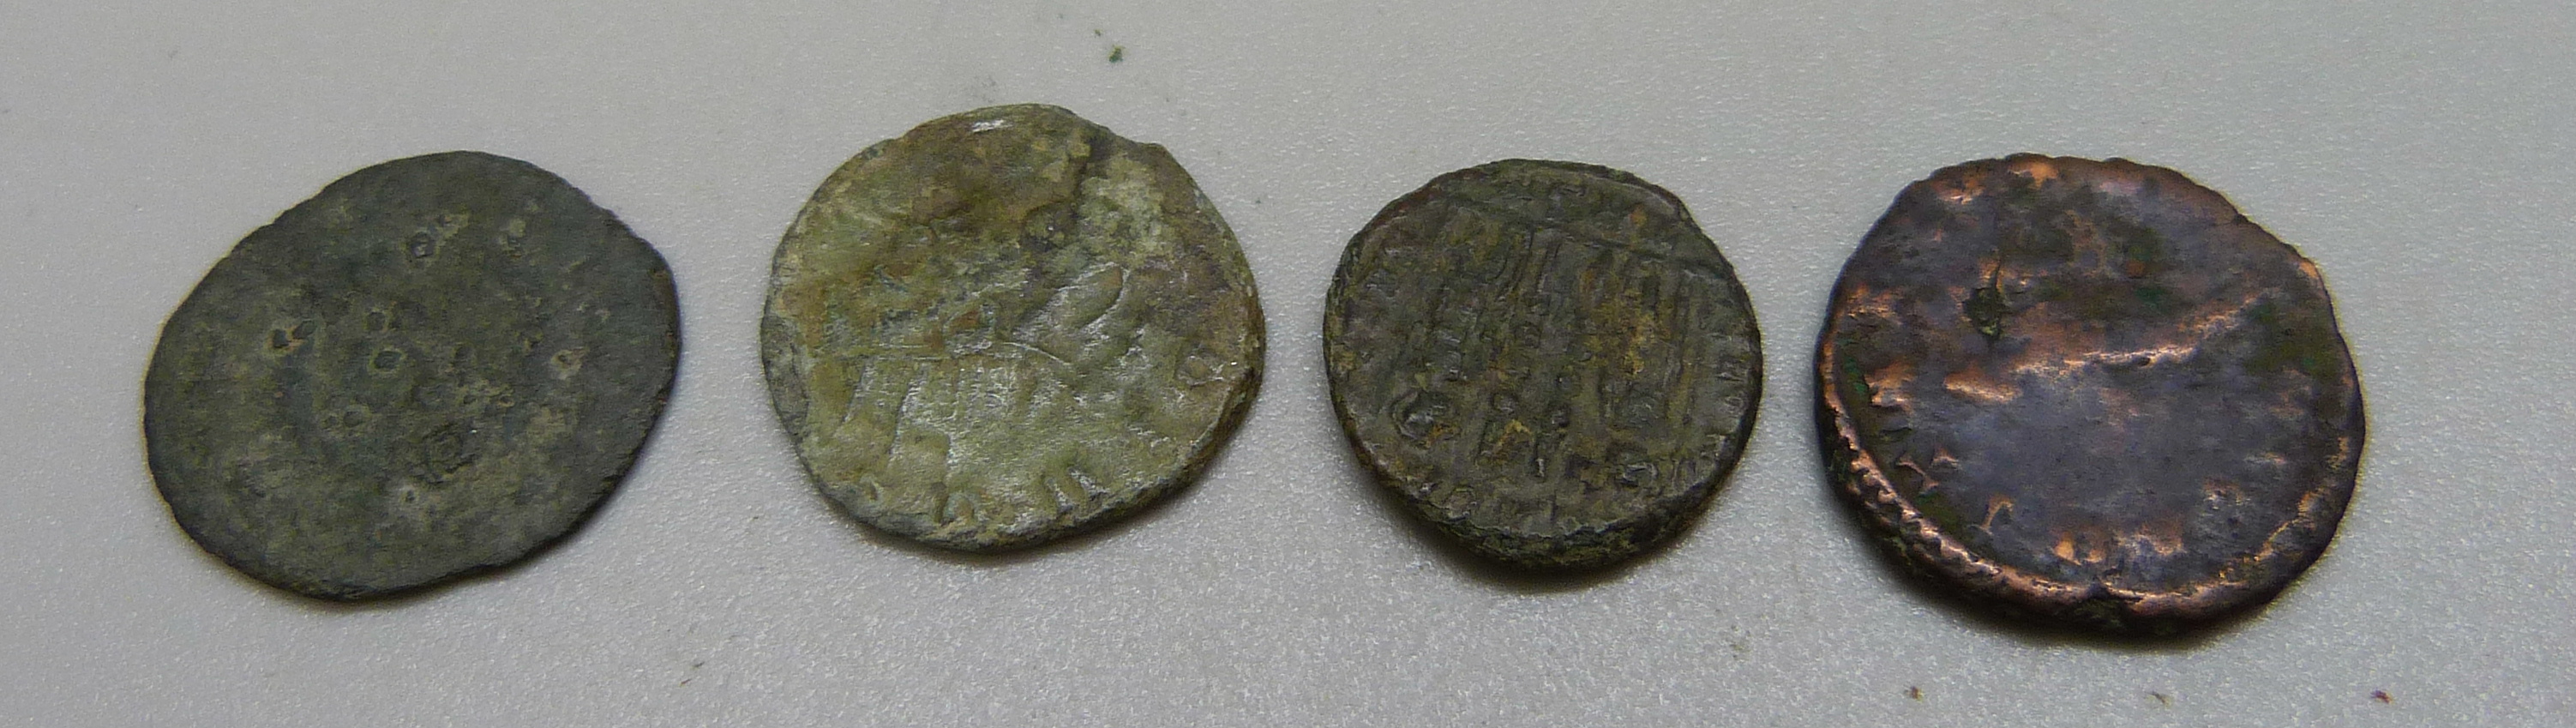 Four bronze Roman coins - Image 2 of 2